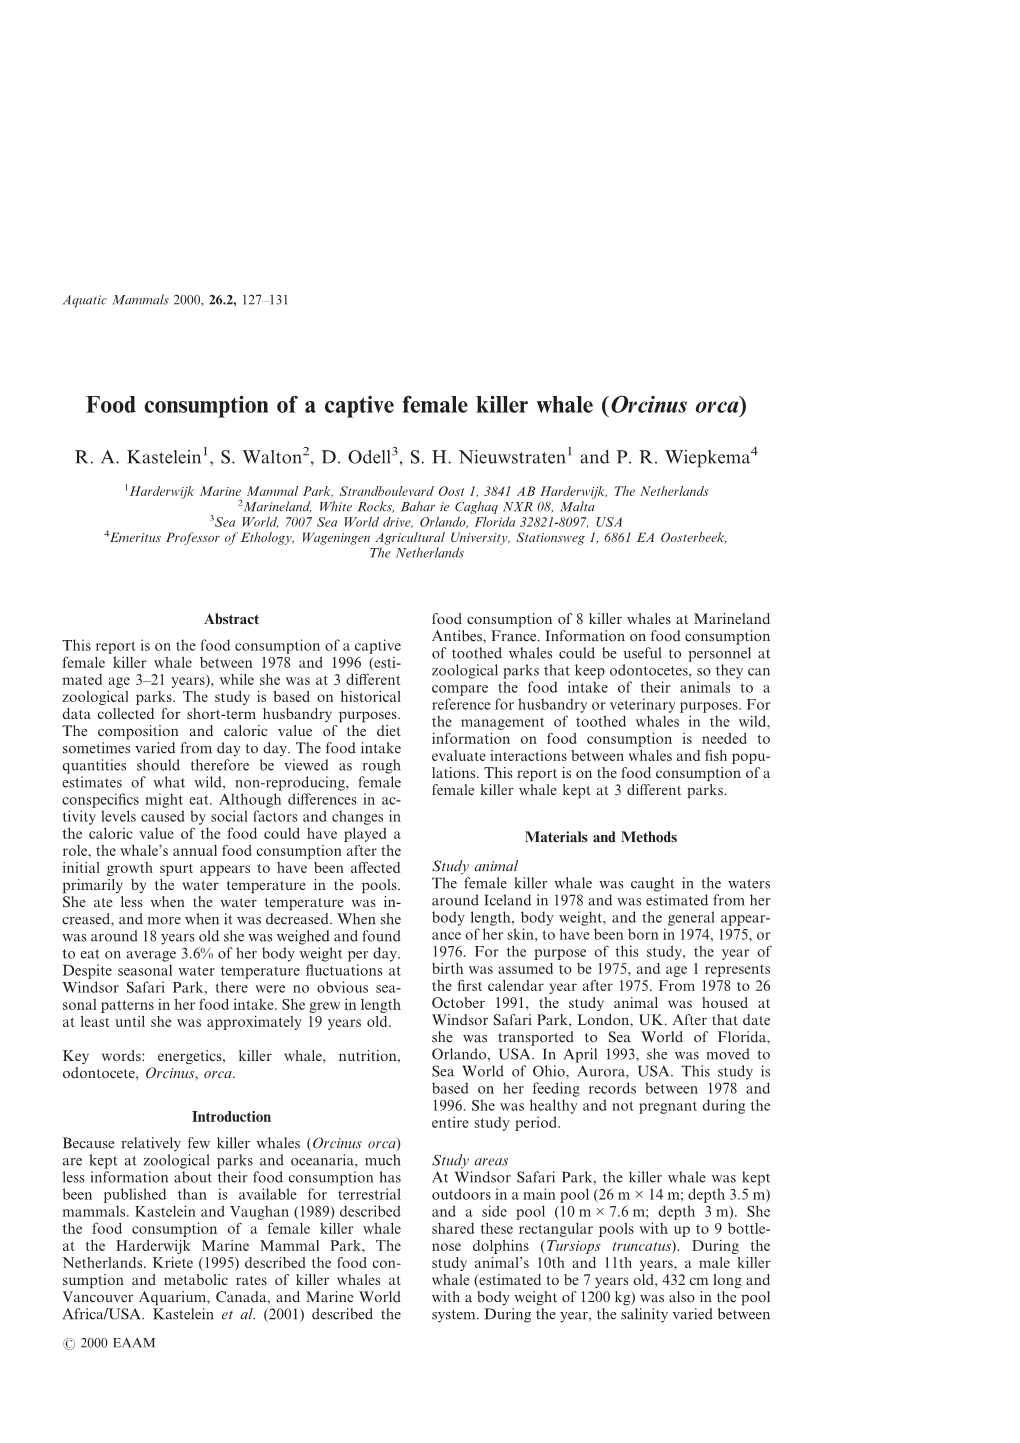 Food Consumption of a Captive Female Killer Whale (Orcinus Orca)